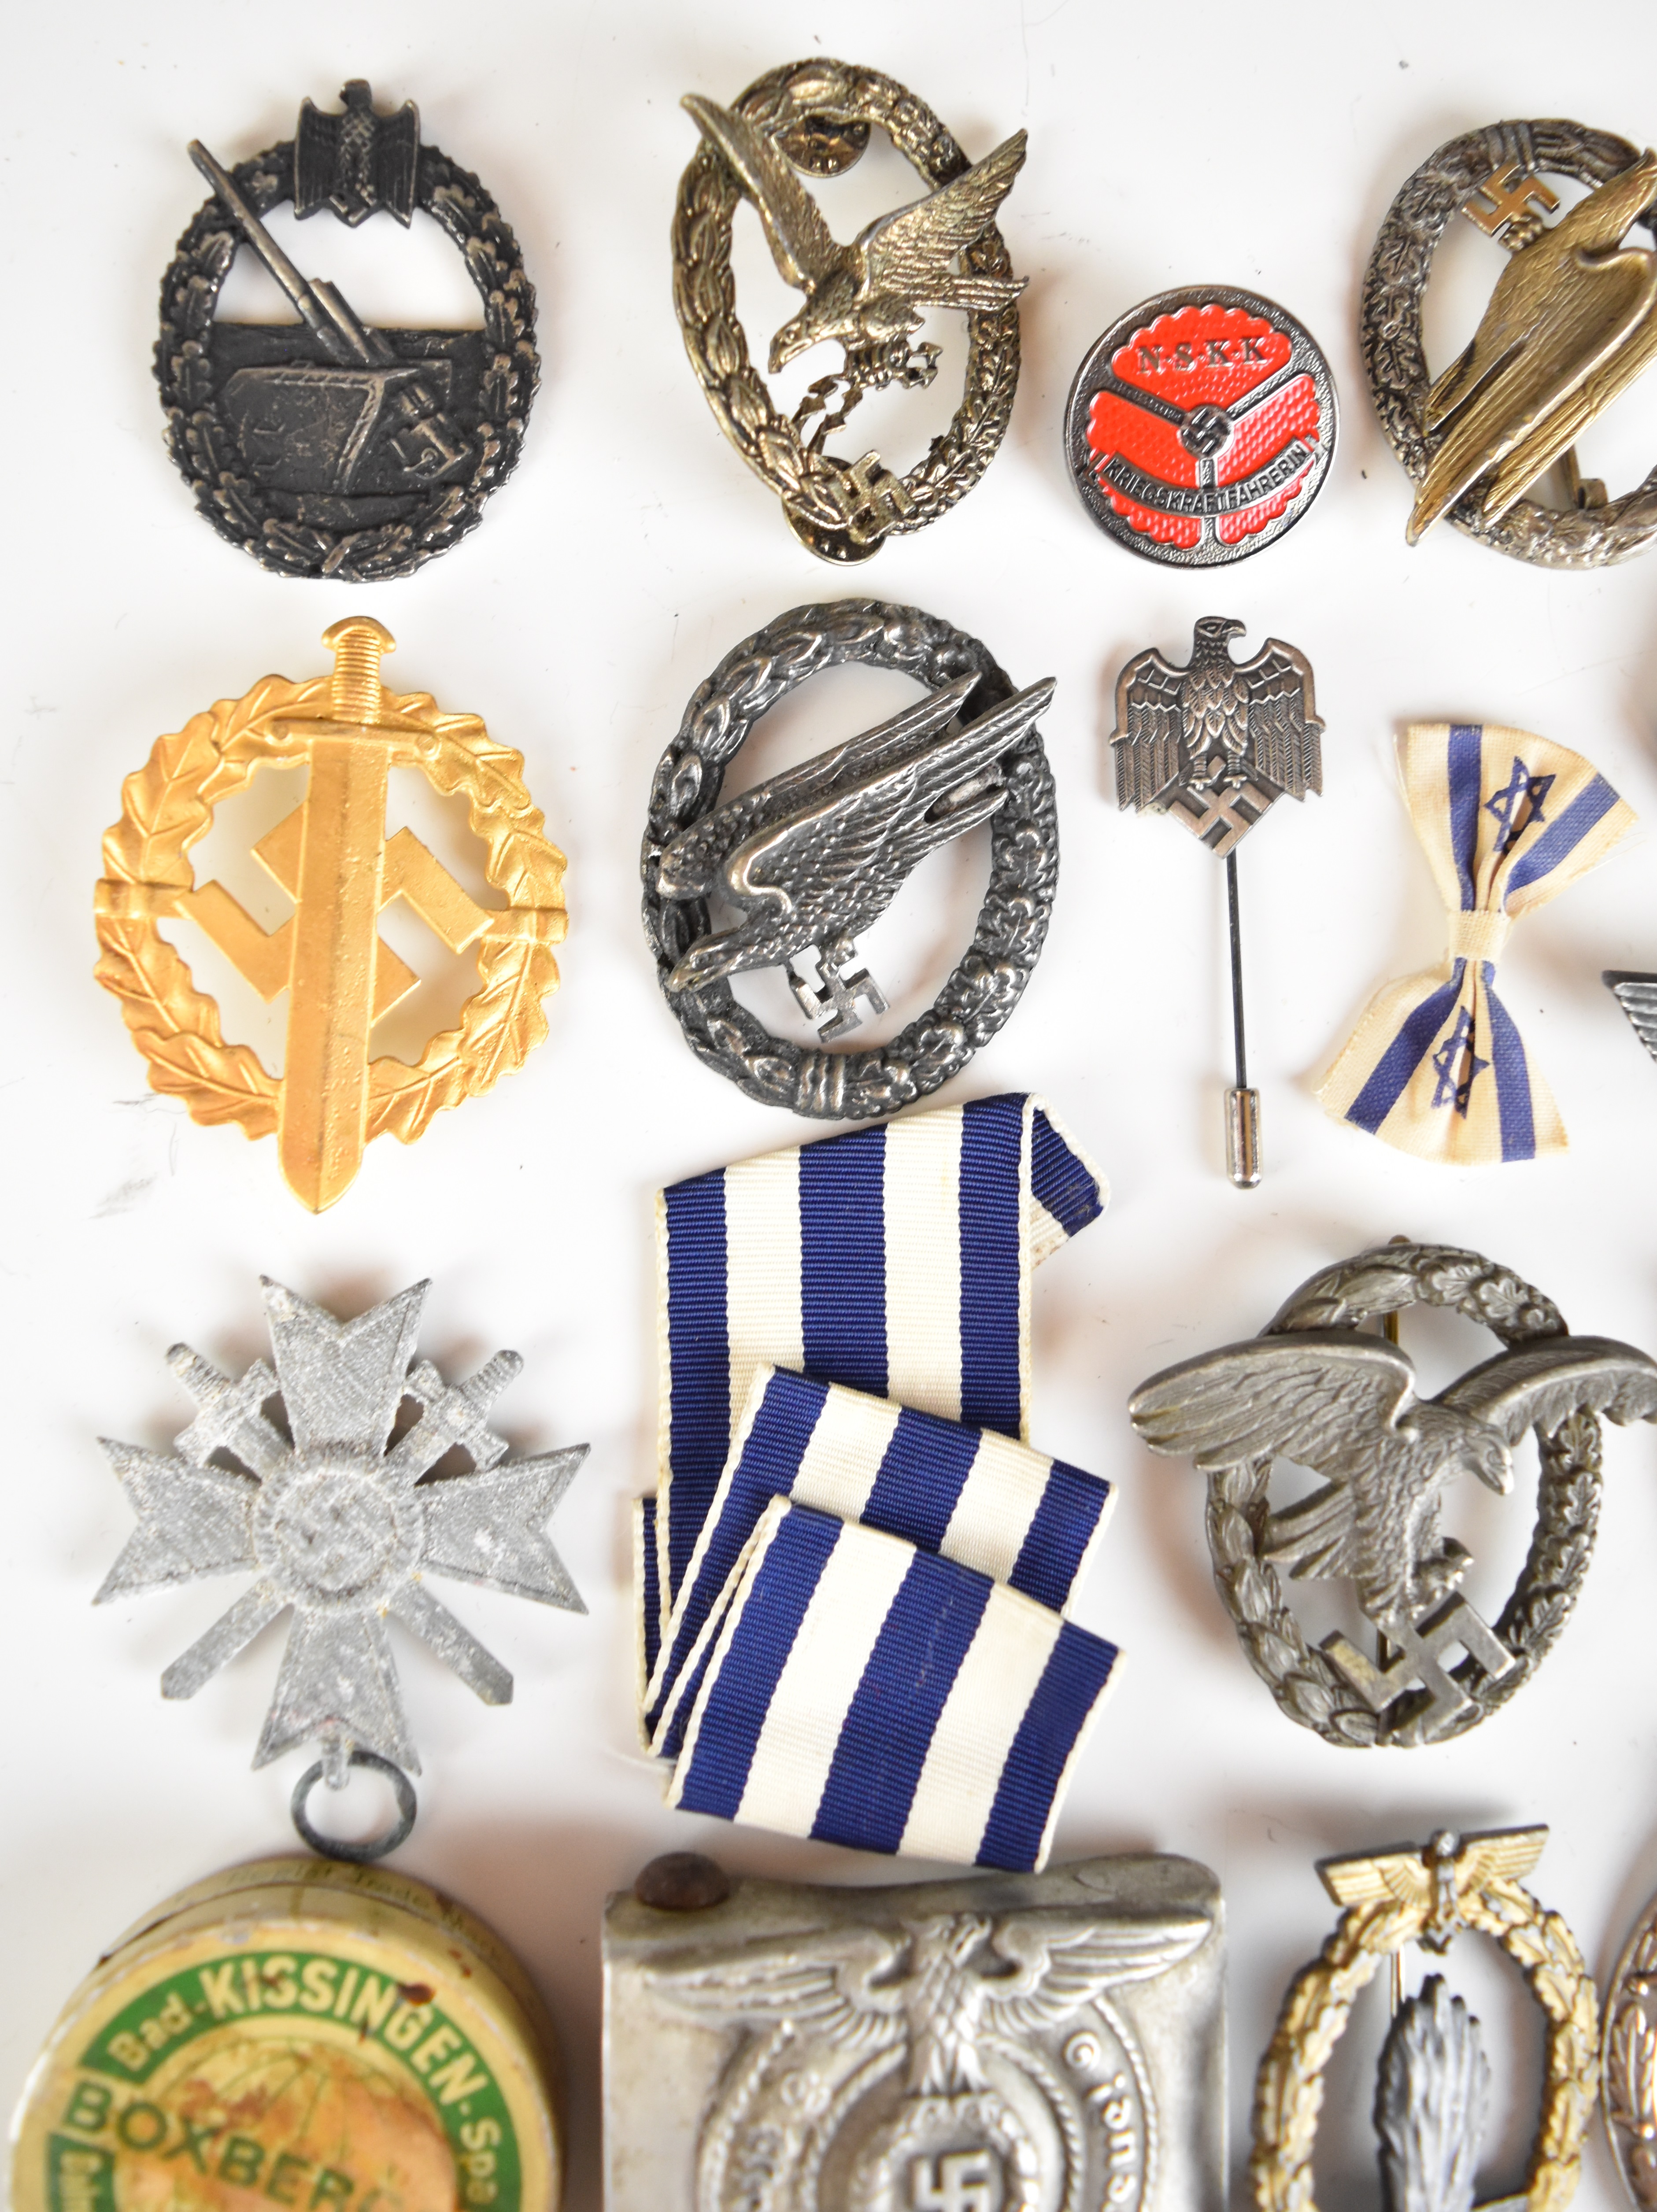 Replica German WW2 Nazi Third Reich badges, insignia and medals including High Seas Fleet, Artillery - Image 10 of 16